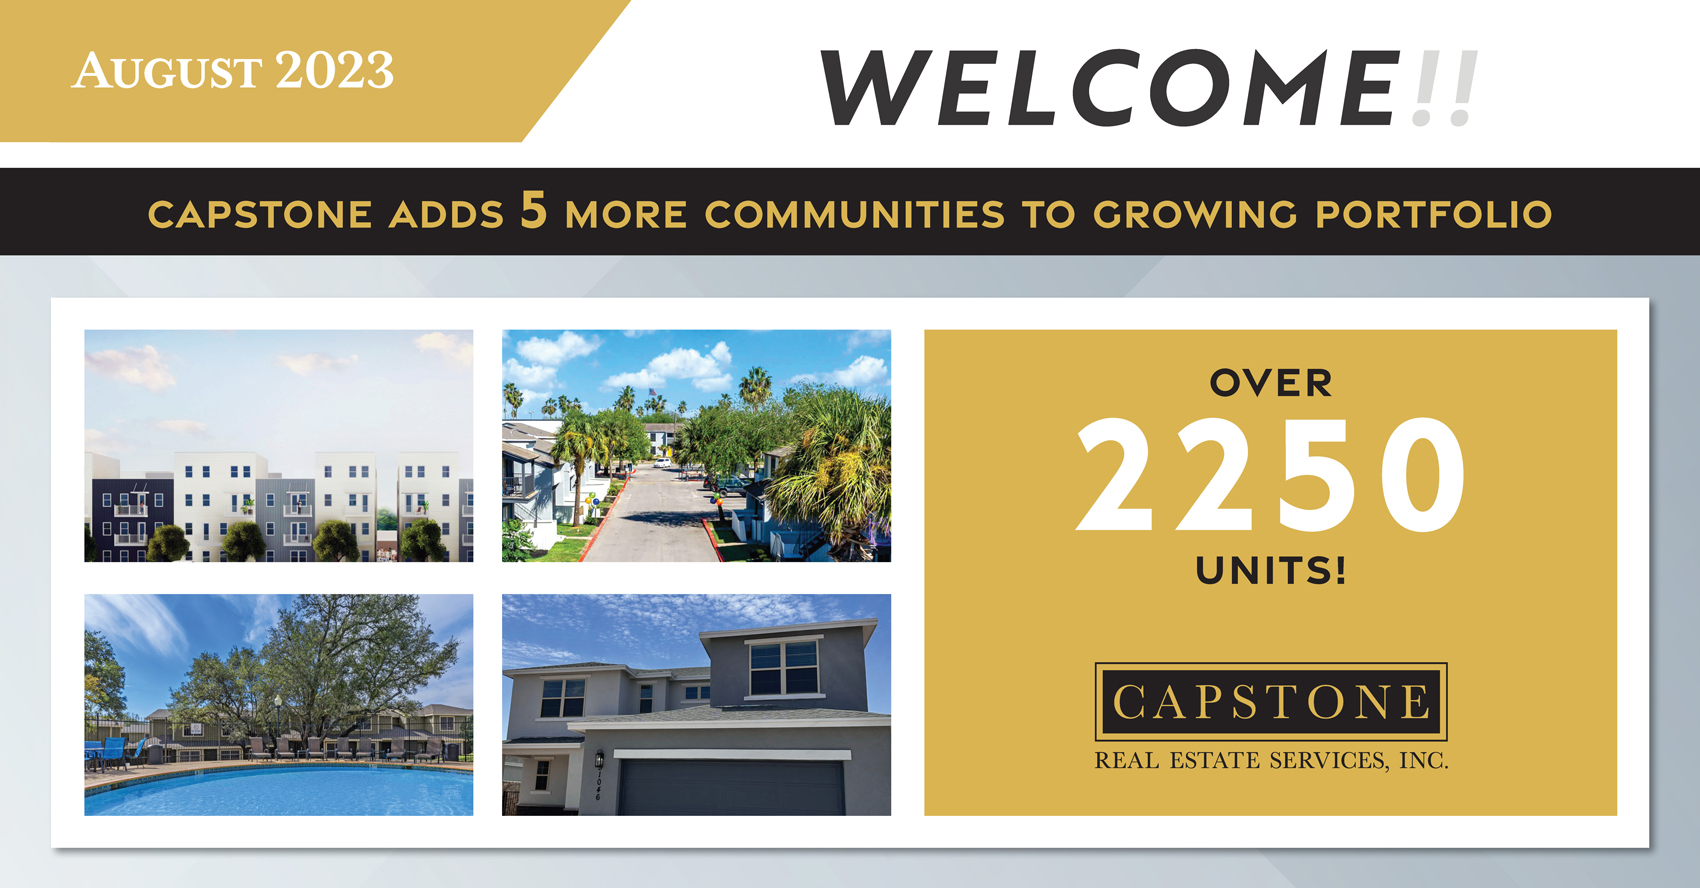 August 2023 CAPSTONE COMMUNITIES - Capstone Real Estate Services